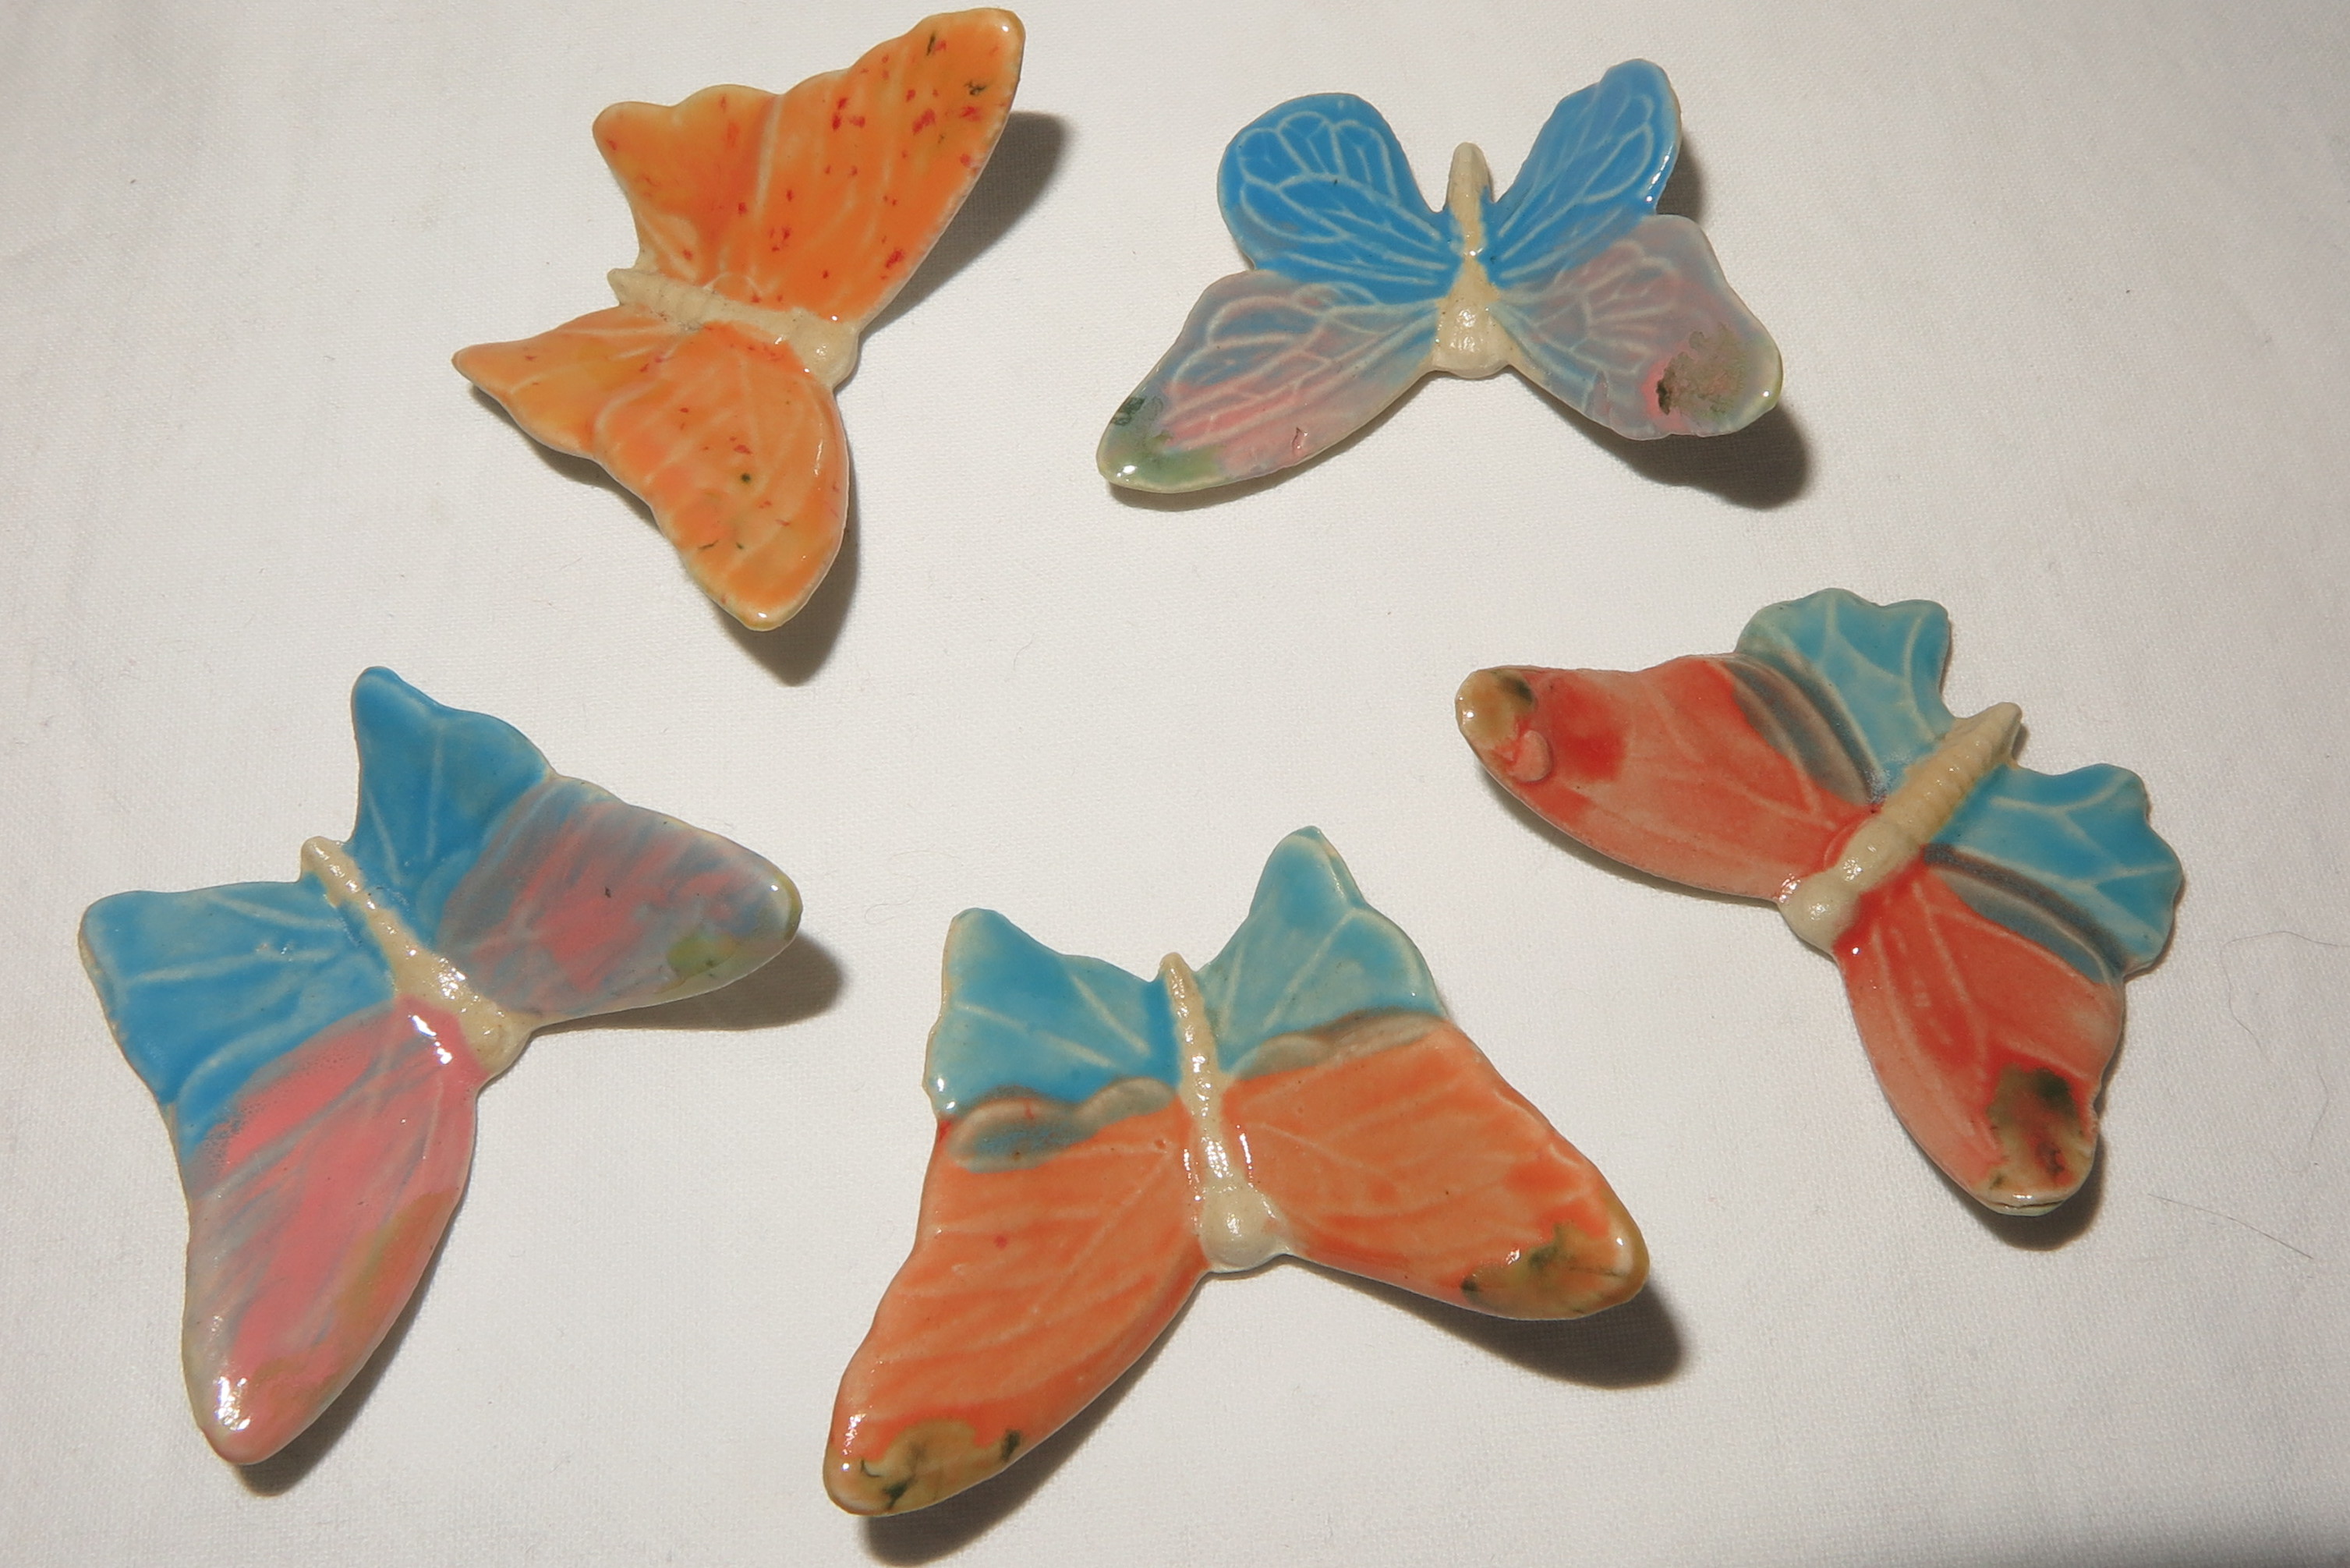 5 Schmetterlinge bunt gemischt, zum Legen